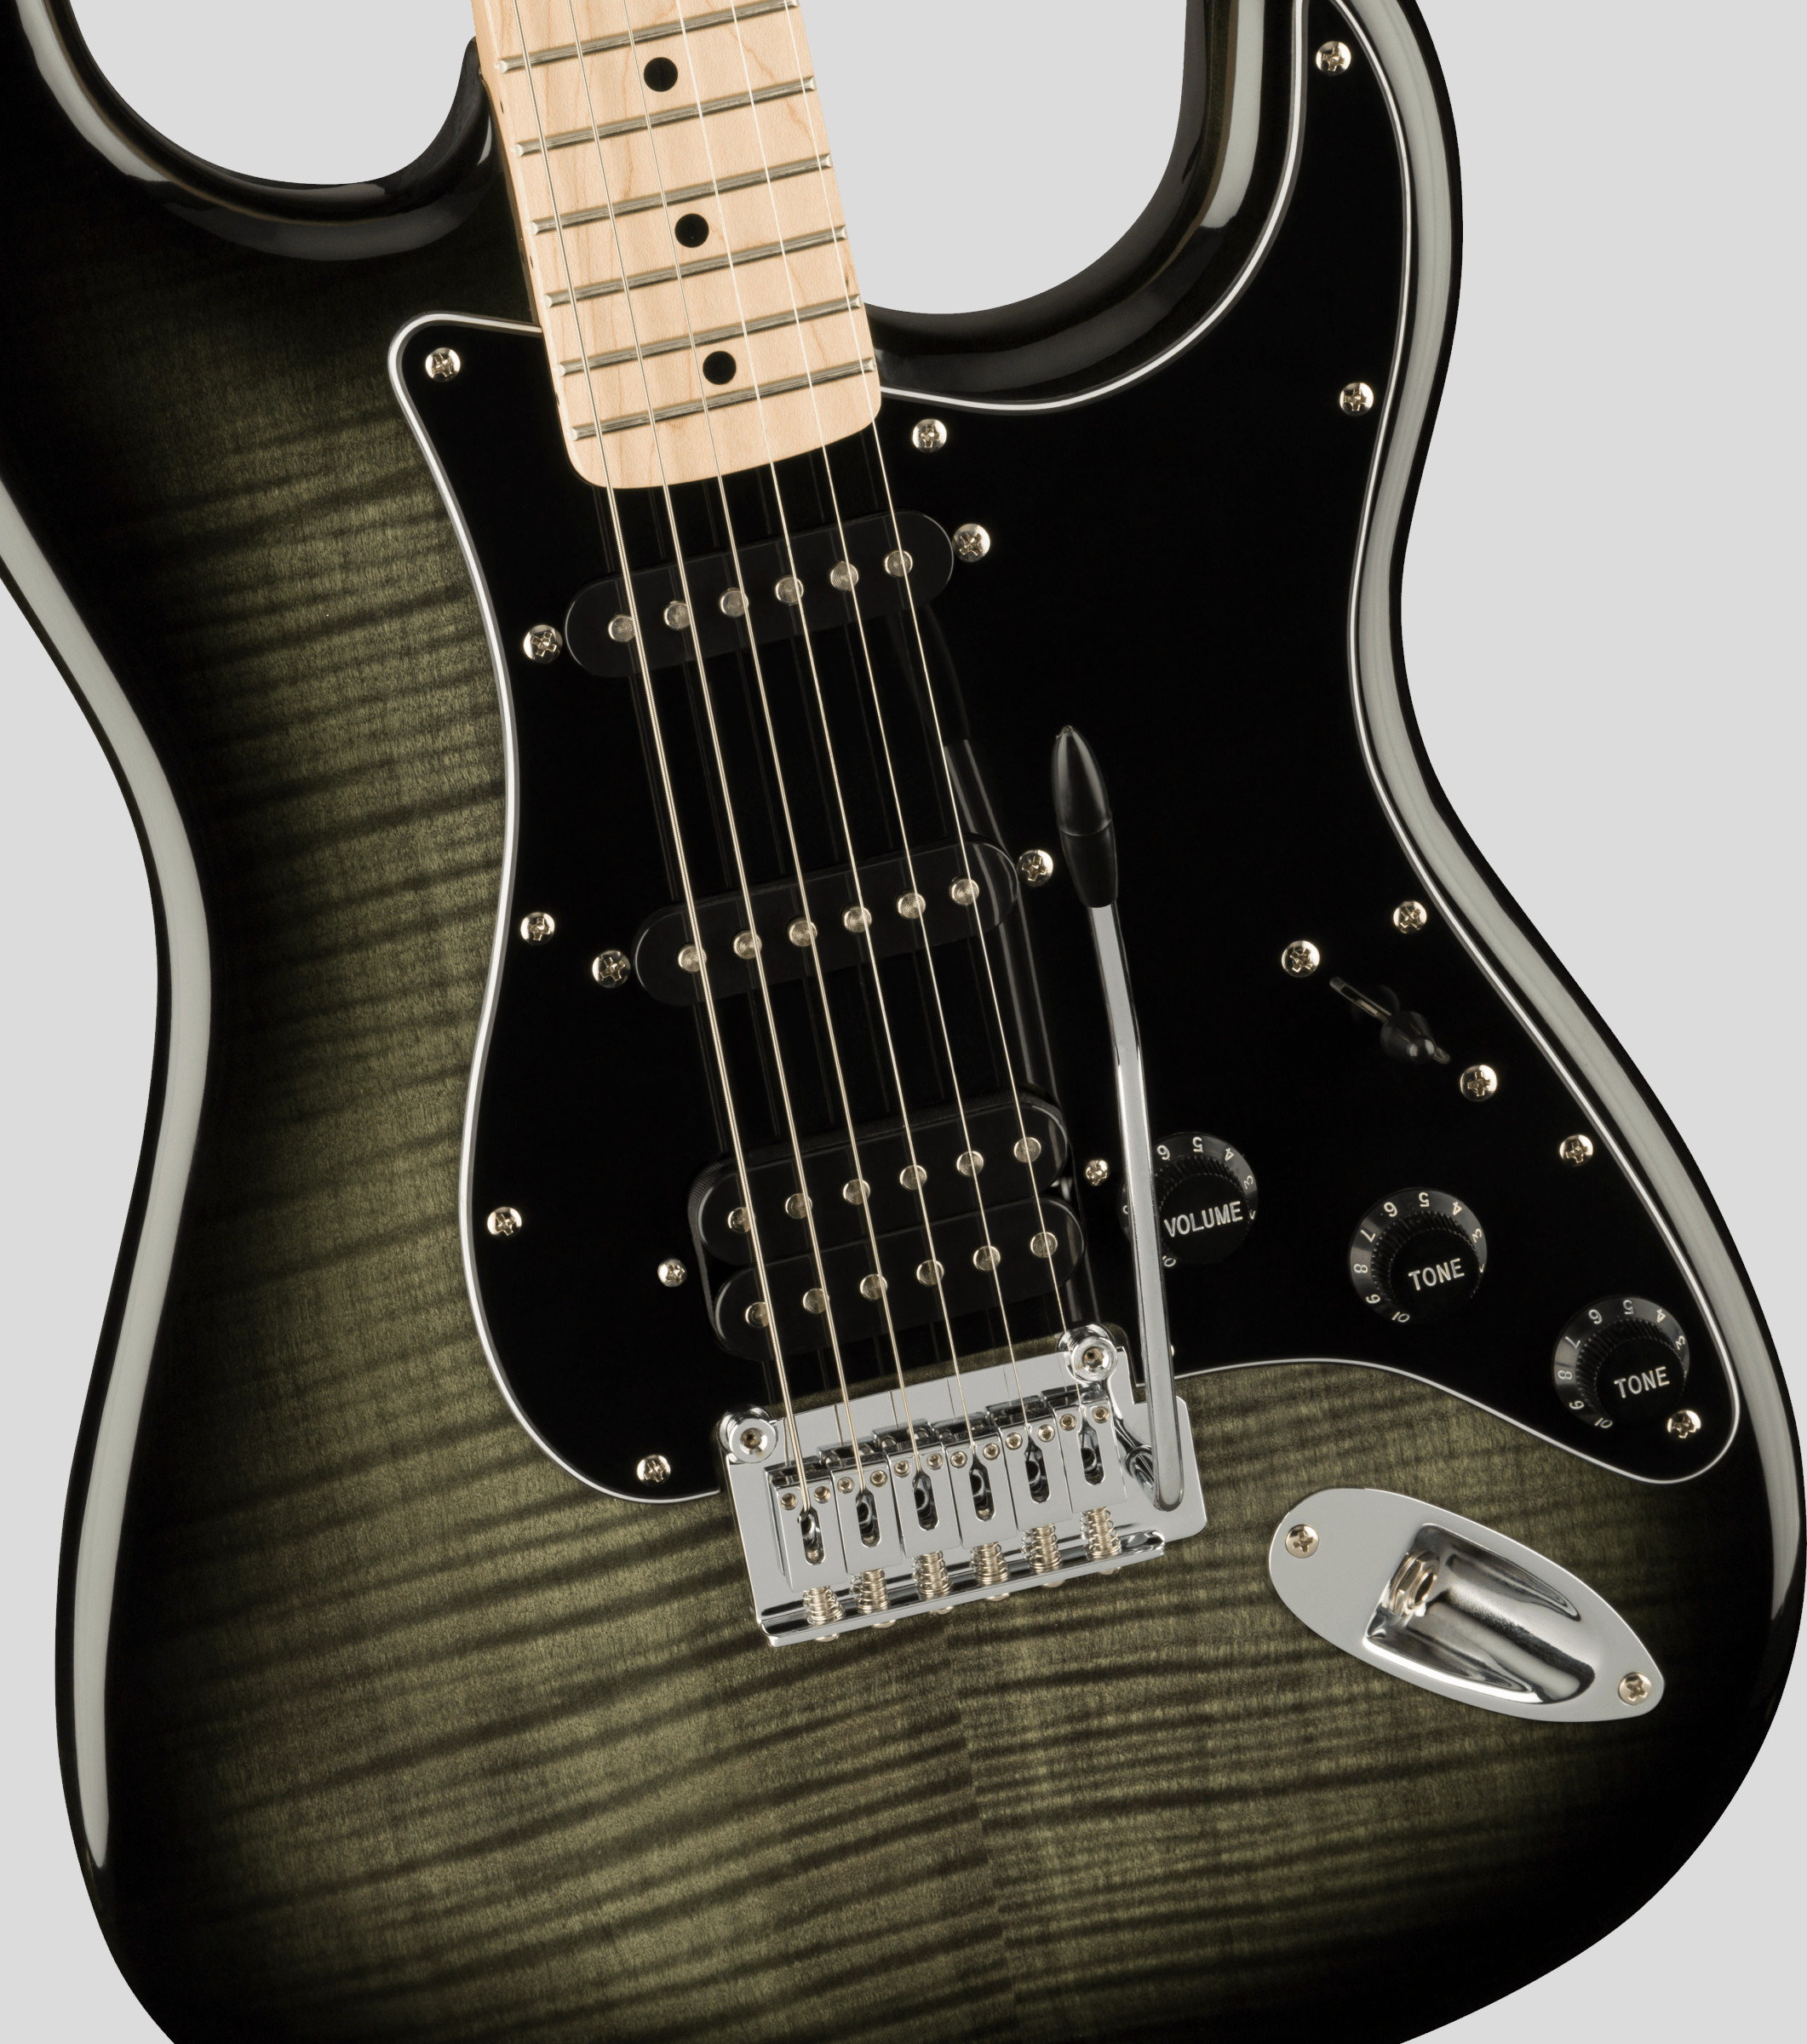 Squier by Fender Affinity Stratocaster FMT HSS Black Burst 4